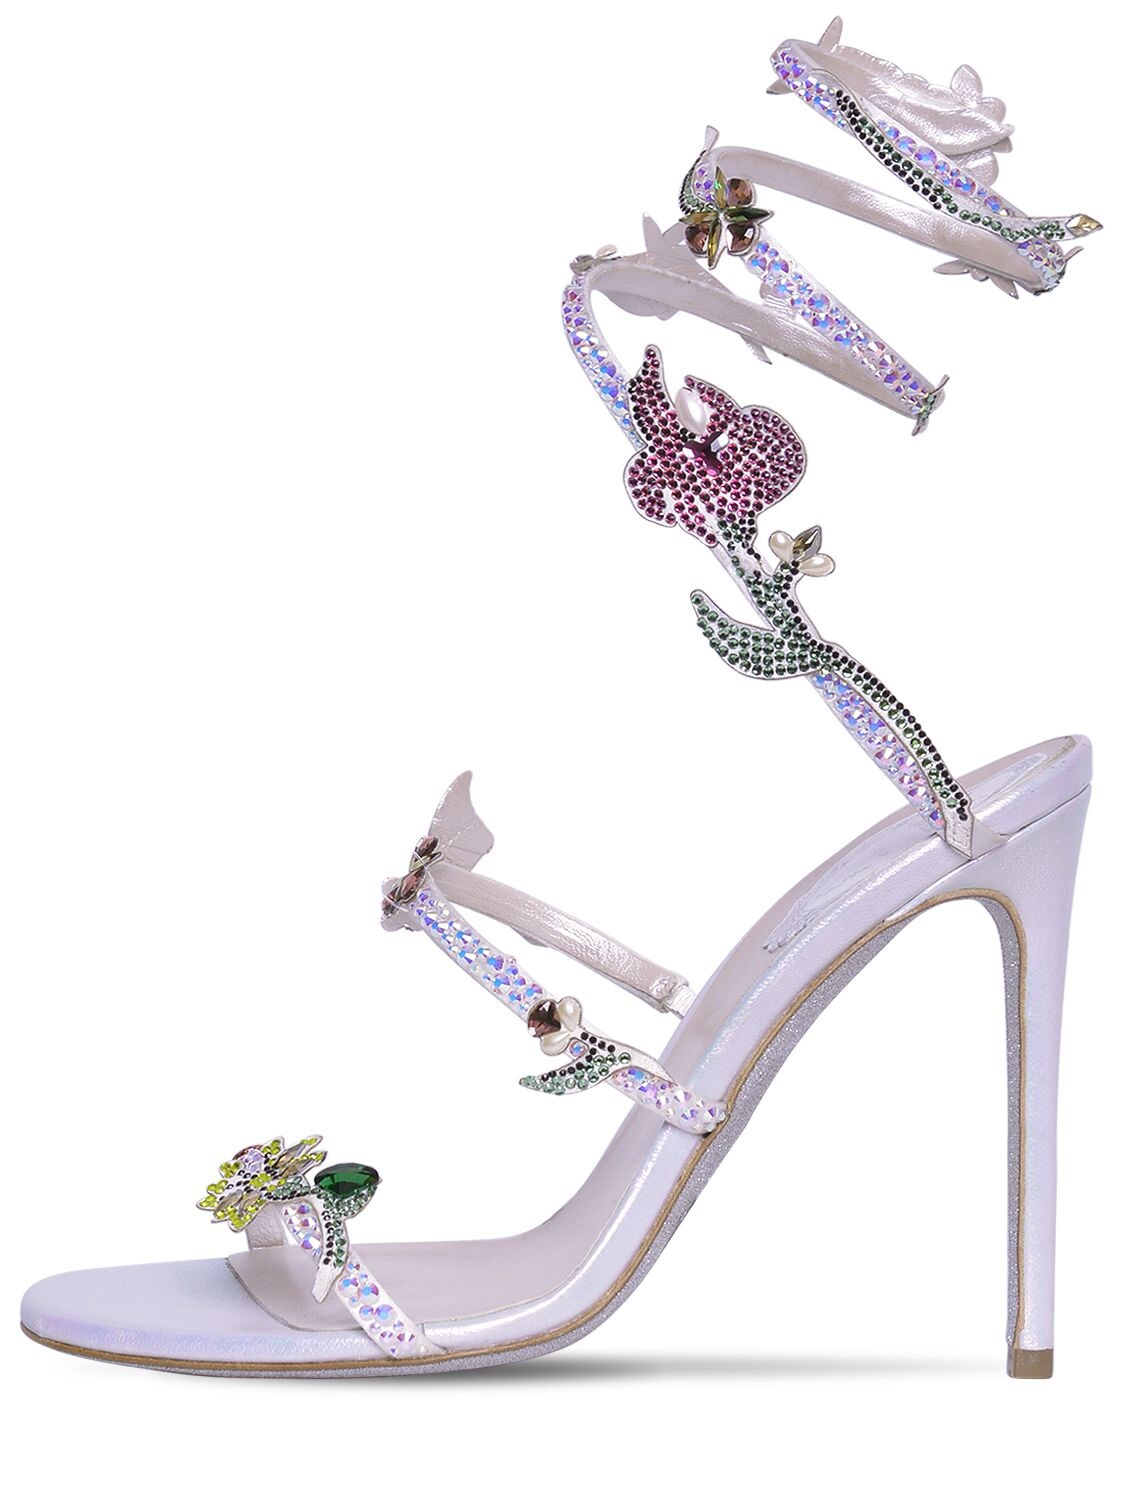 René Caovilla 105mm Satin & Crystal Sandals In White,pearl